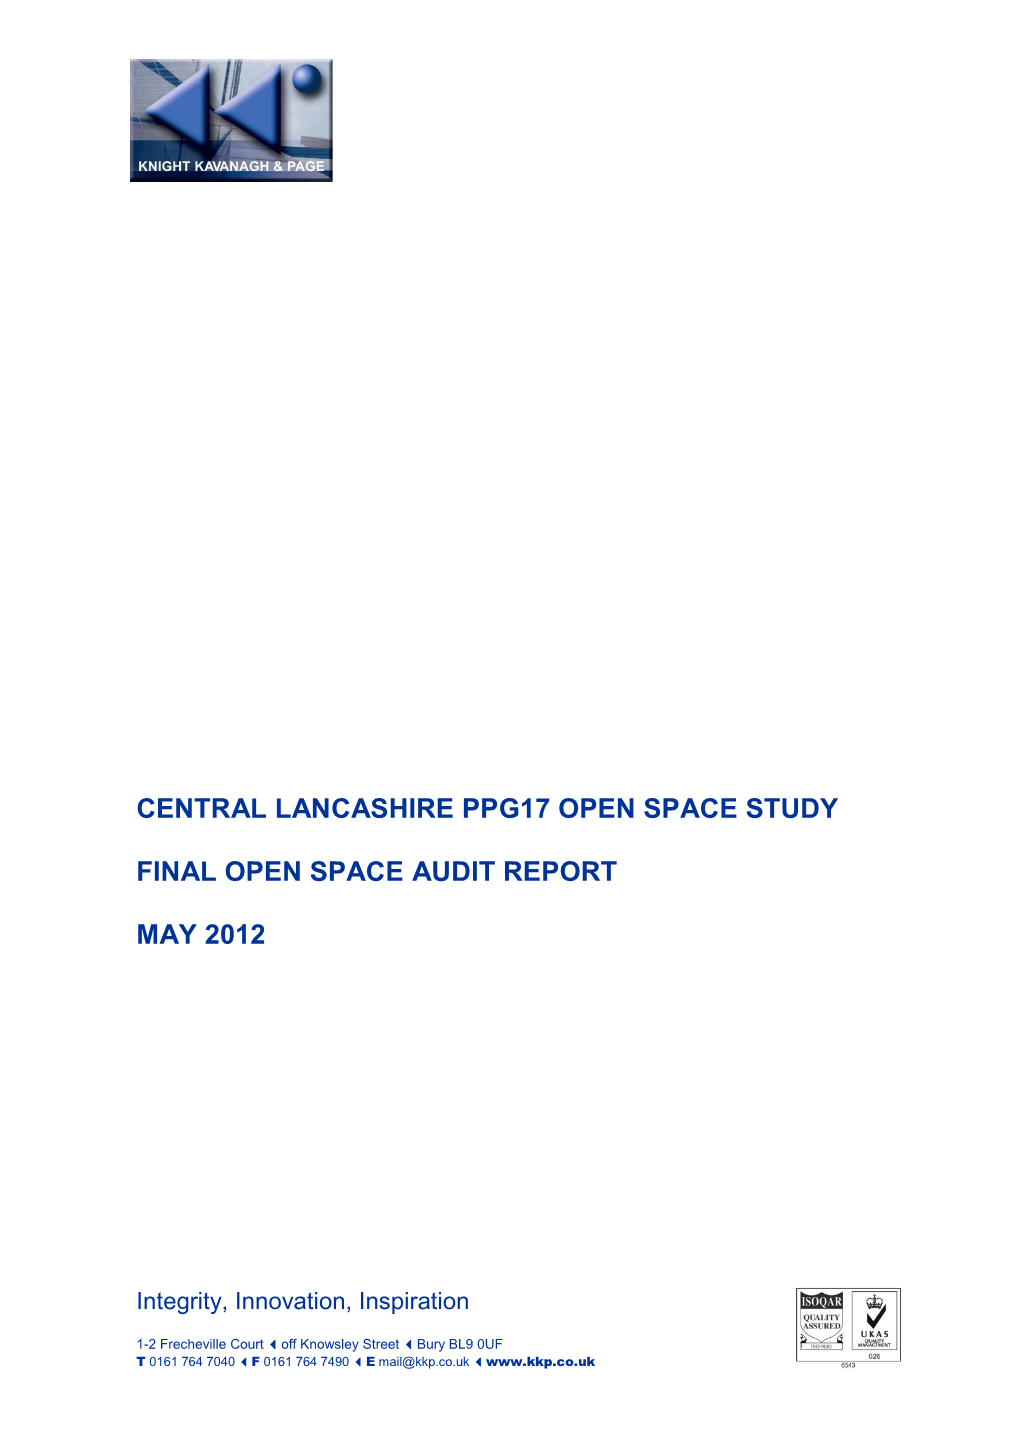 Central Lancashire Ppg17 Open Space Study